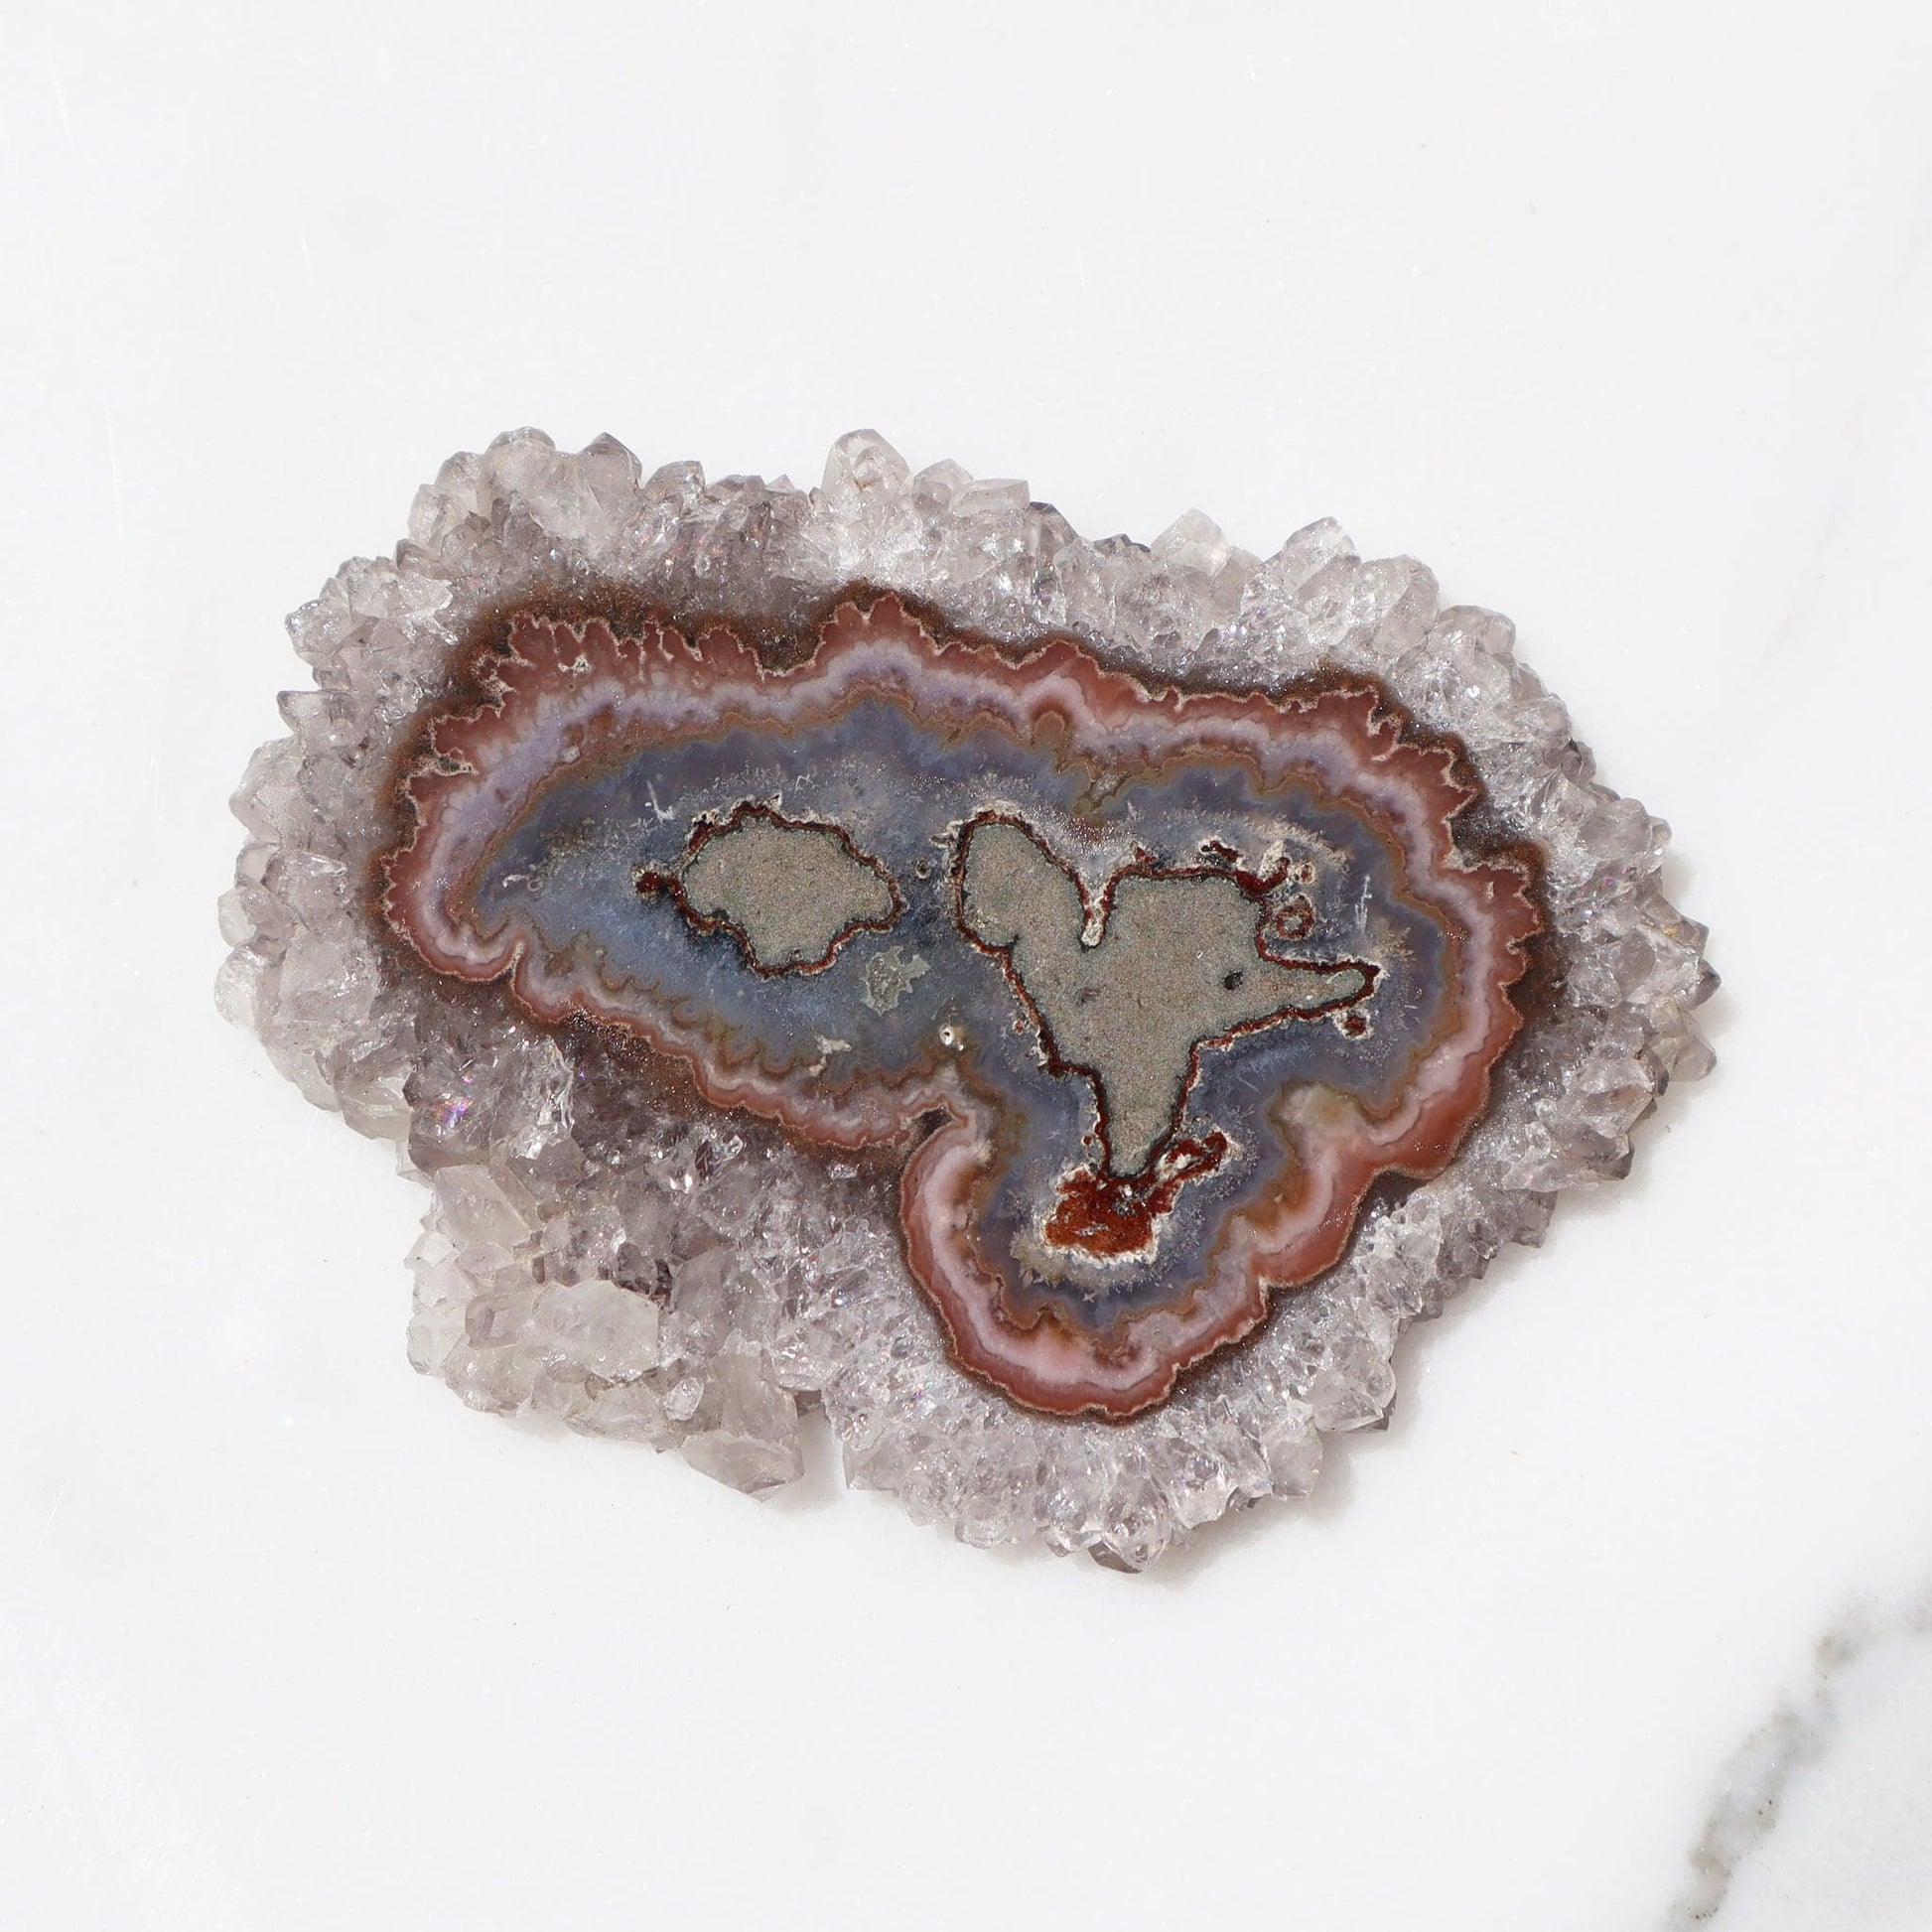 See Through White Quartz Amethyst Stalactite Slice for sale, Uruguay  - Deepest Earth